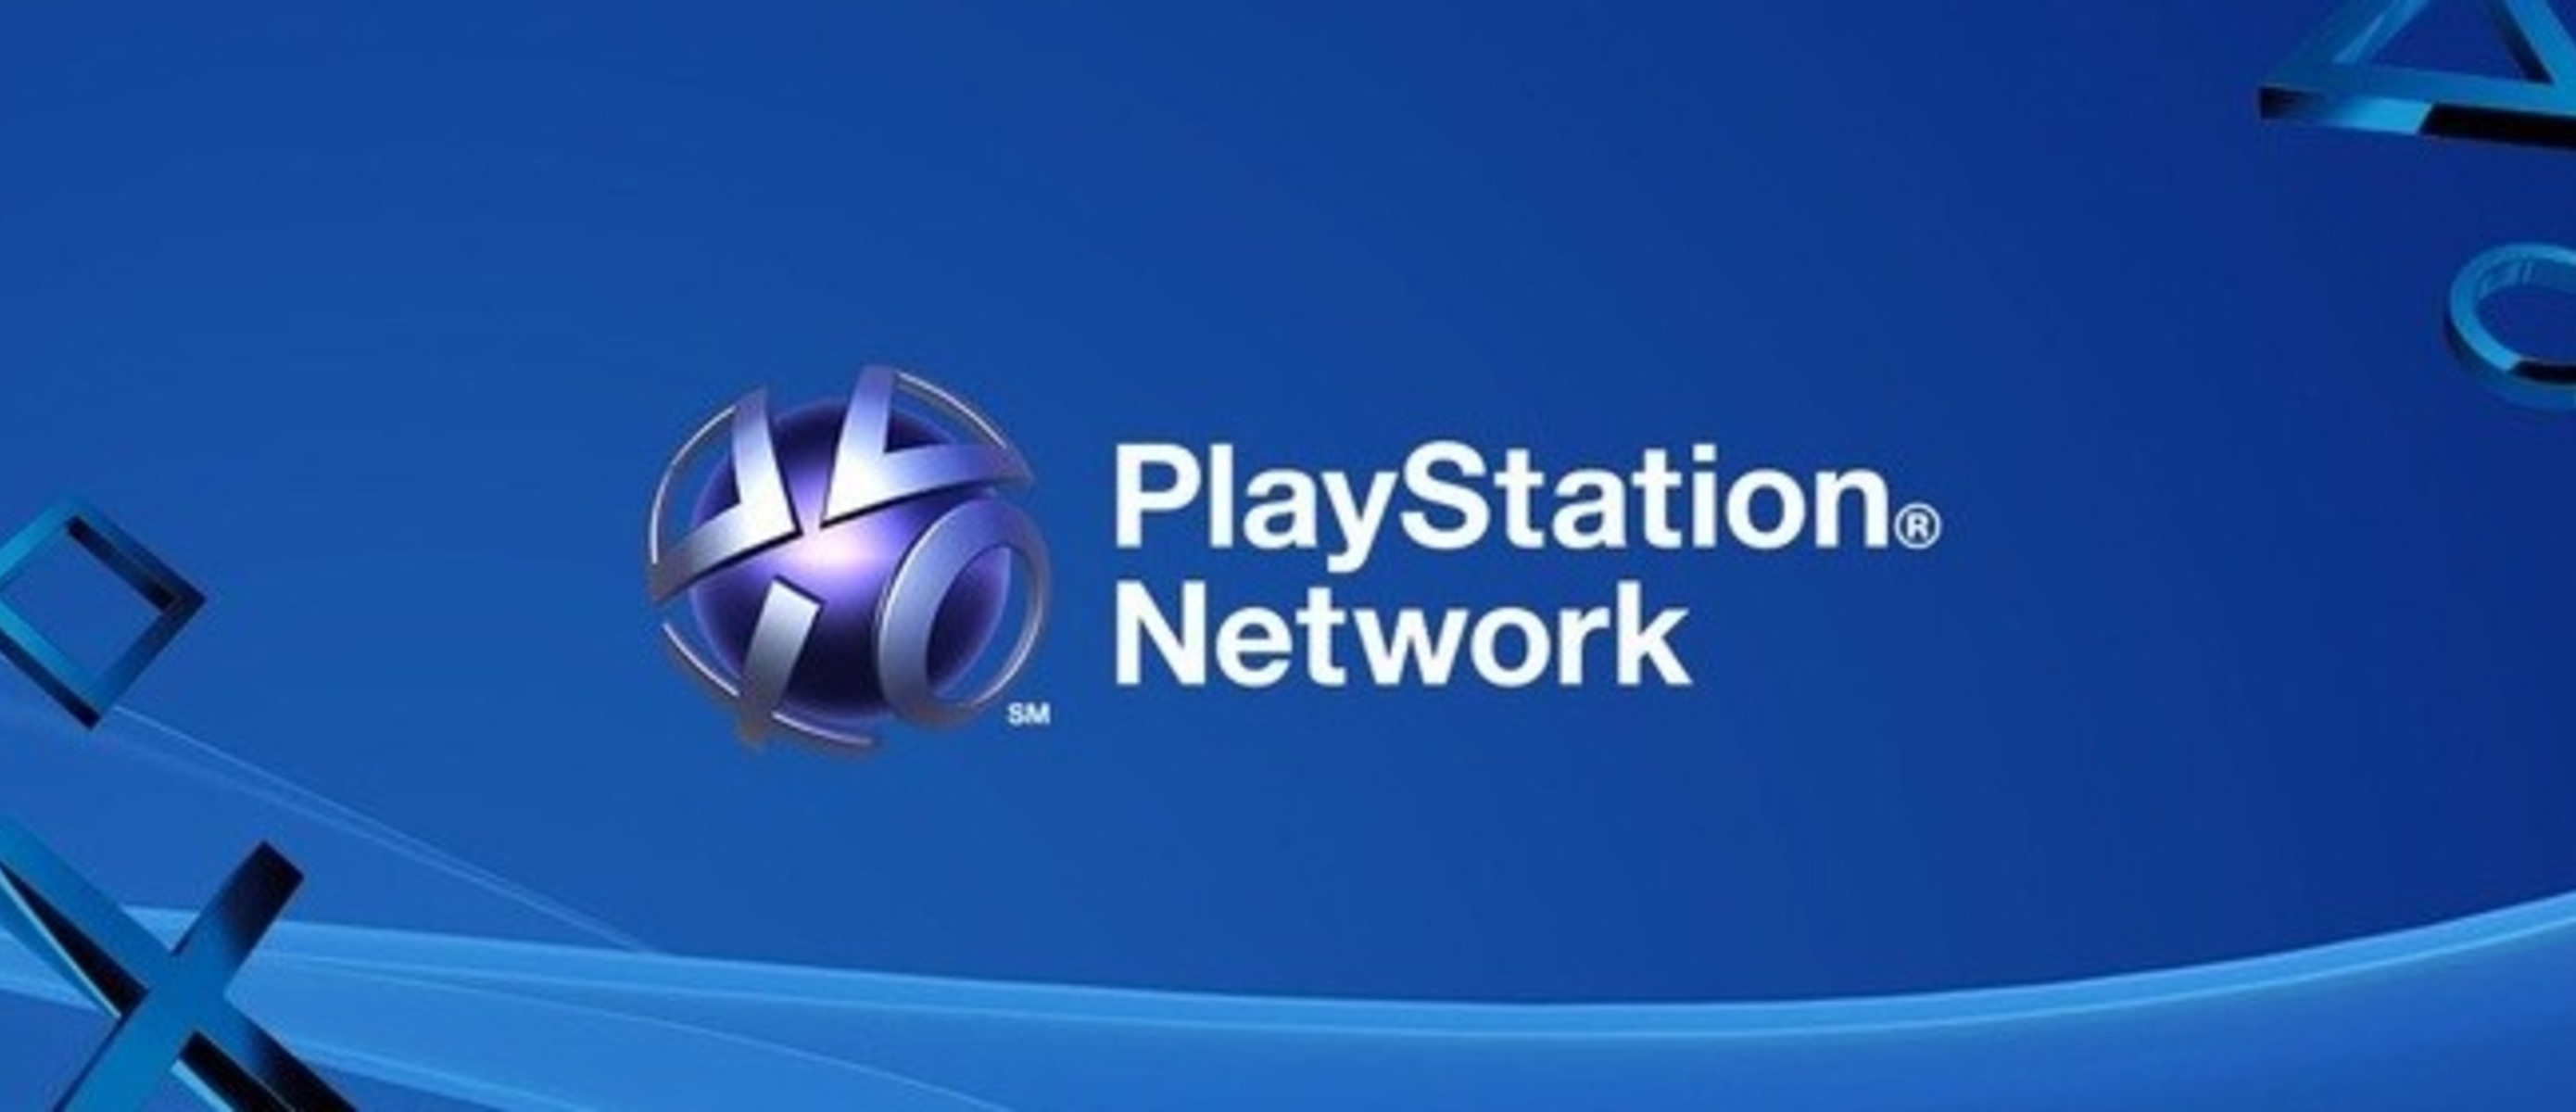 Playstation network poland. Ps4 PLAYSTATION Network. Ps4 Network сеть. PLAYSTATION Network в PLAYSTATION. PSN логотип.